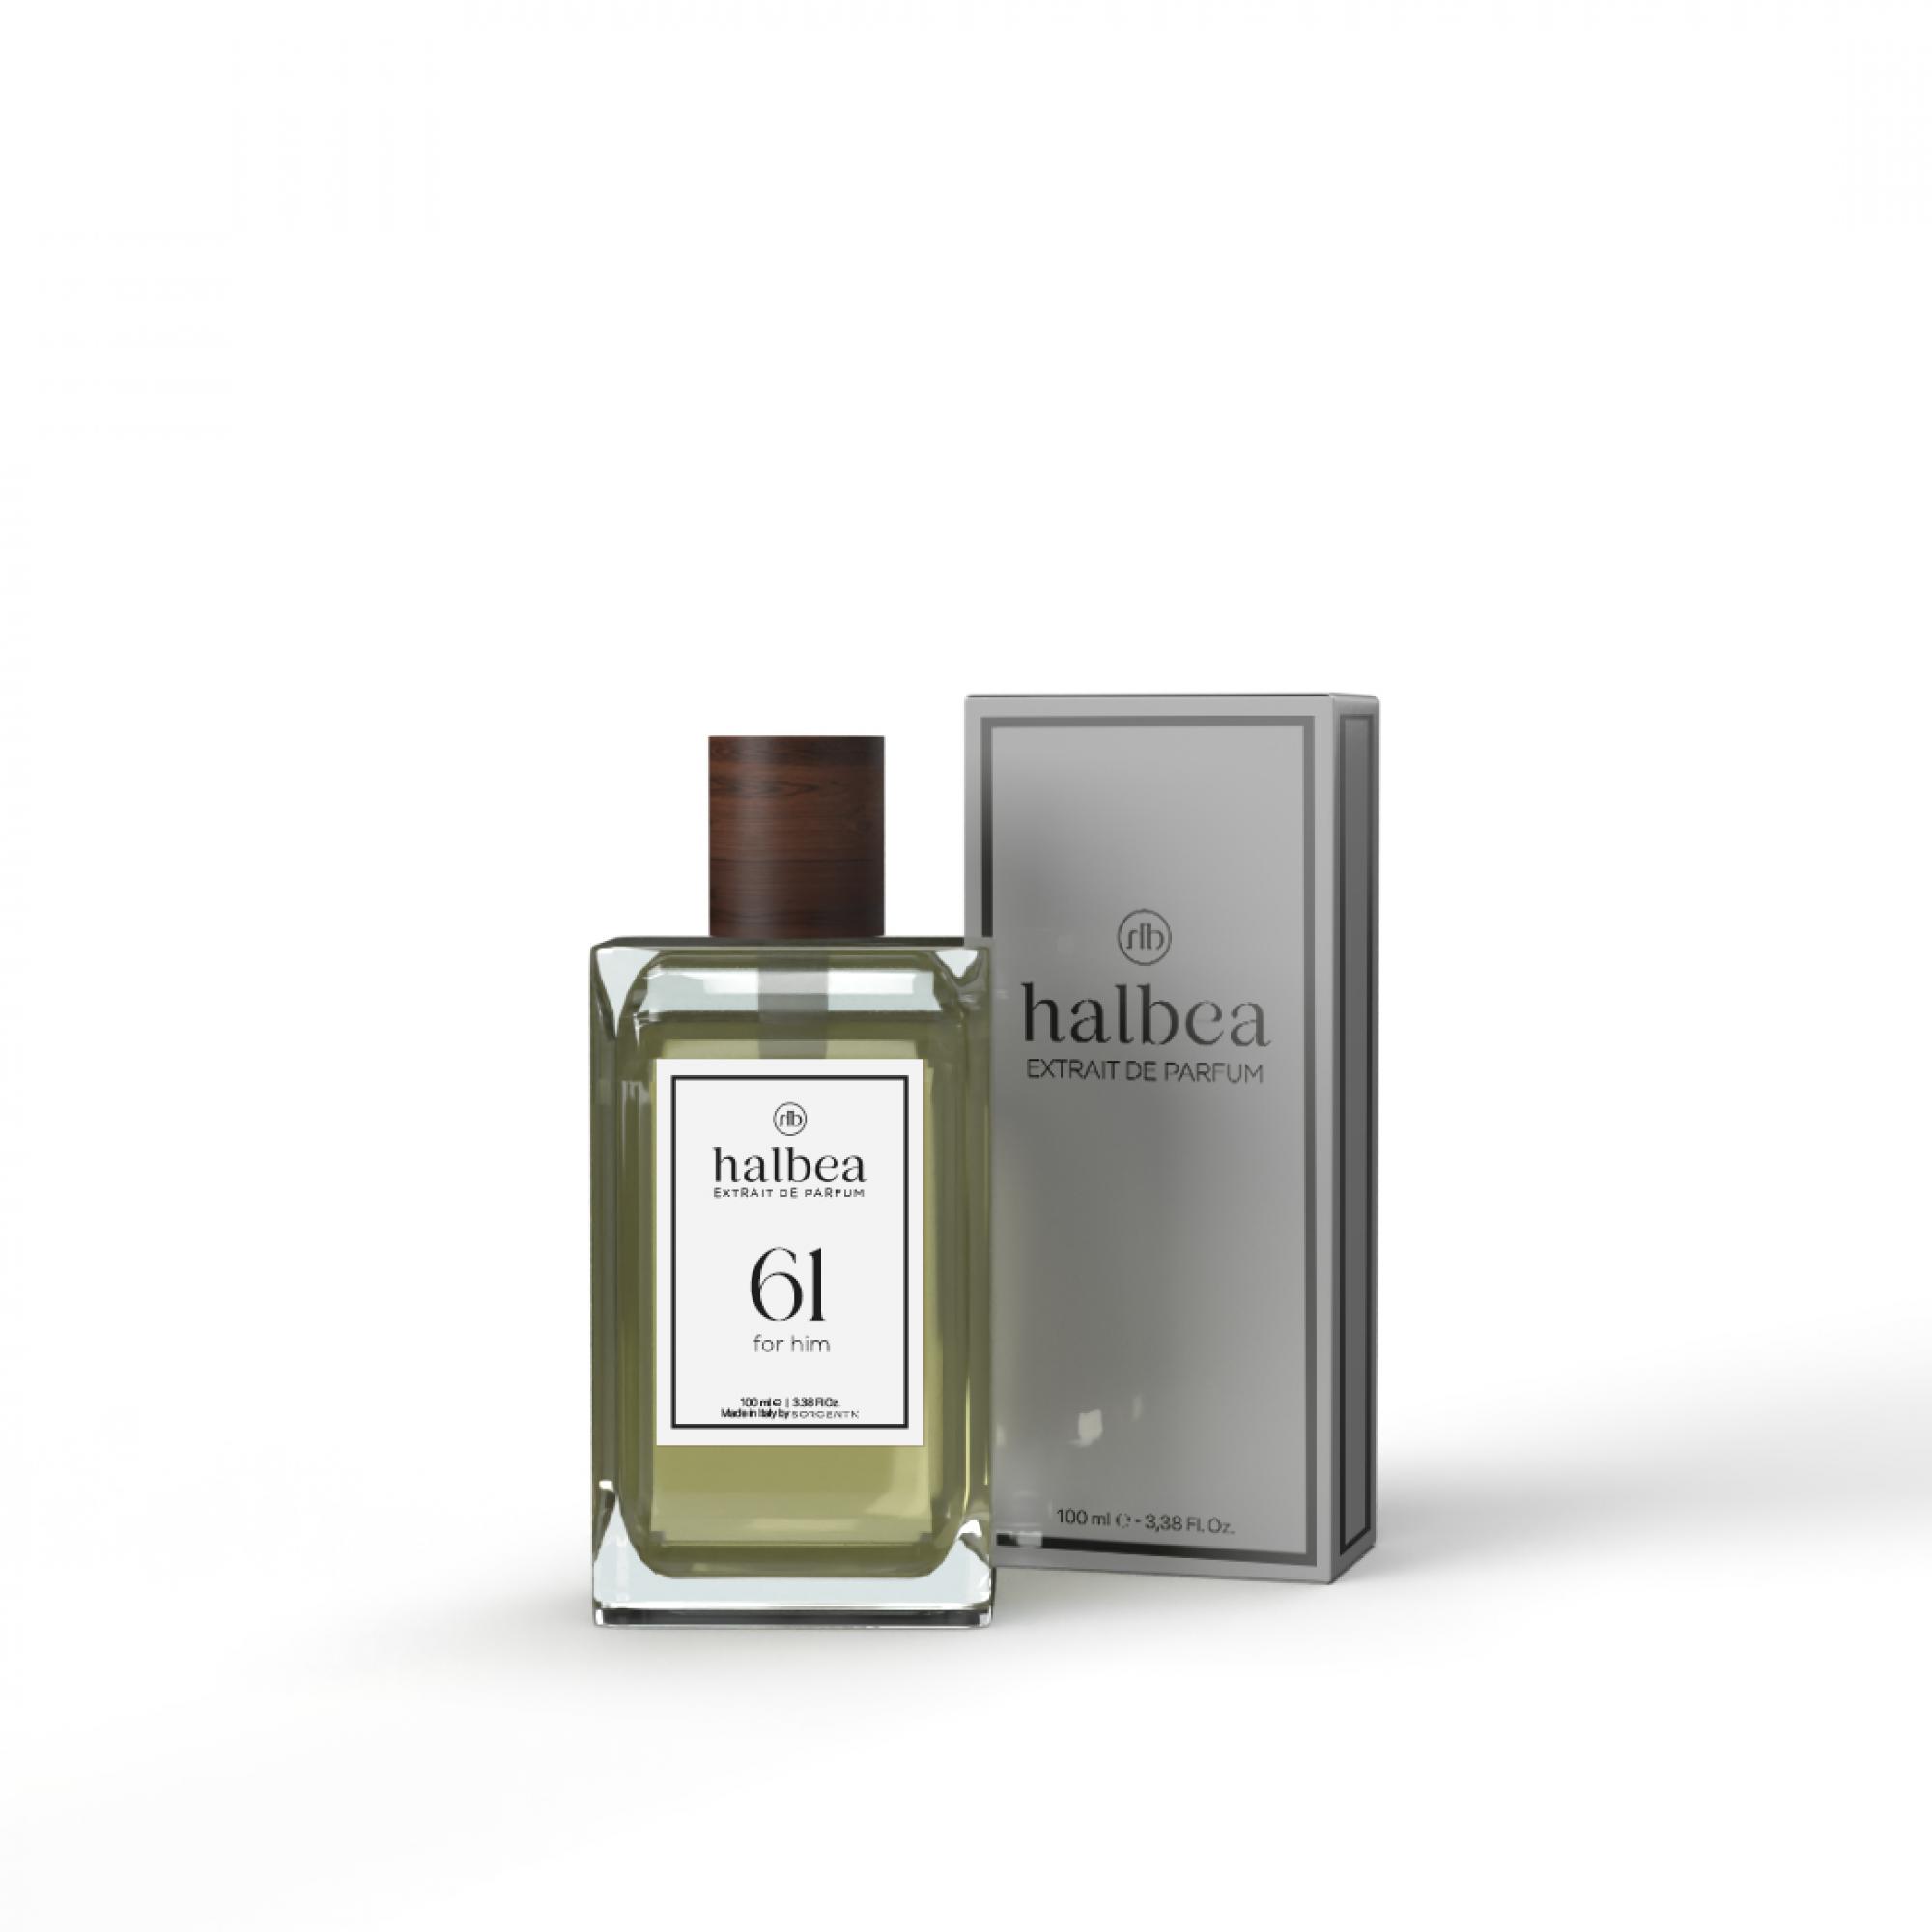  Halbea Parfum Nr. 61 insp. by Chanel Bleu de Chanel Sorgenta Duftzwilling 100ml